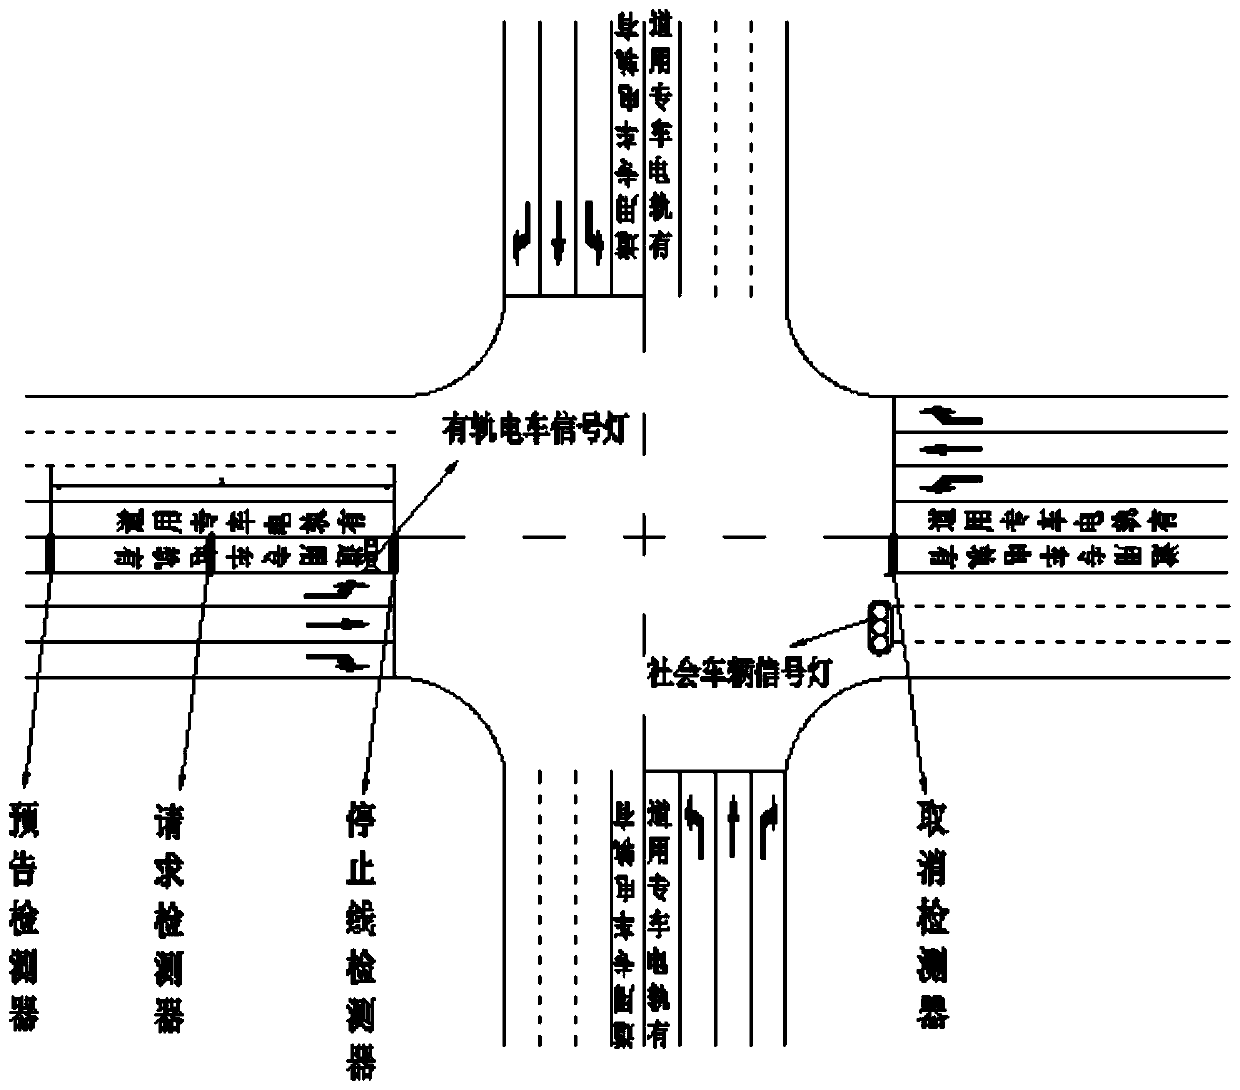 Cooperative priority control method for single tram level crossing